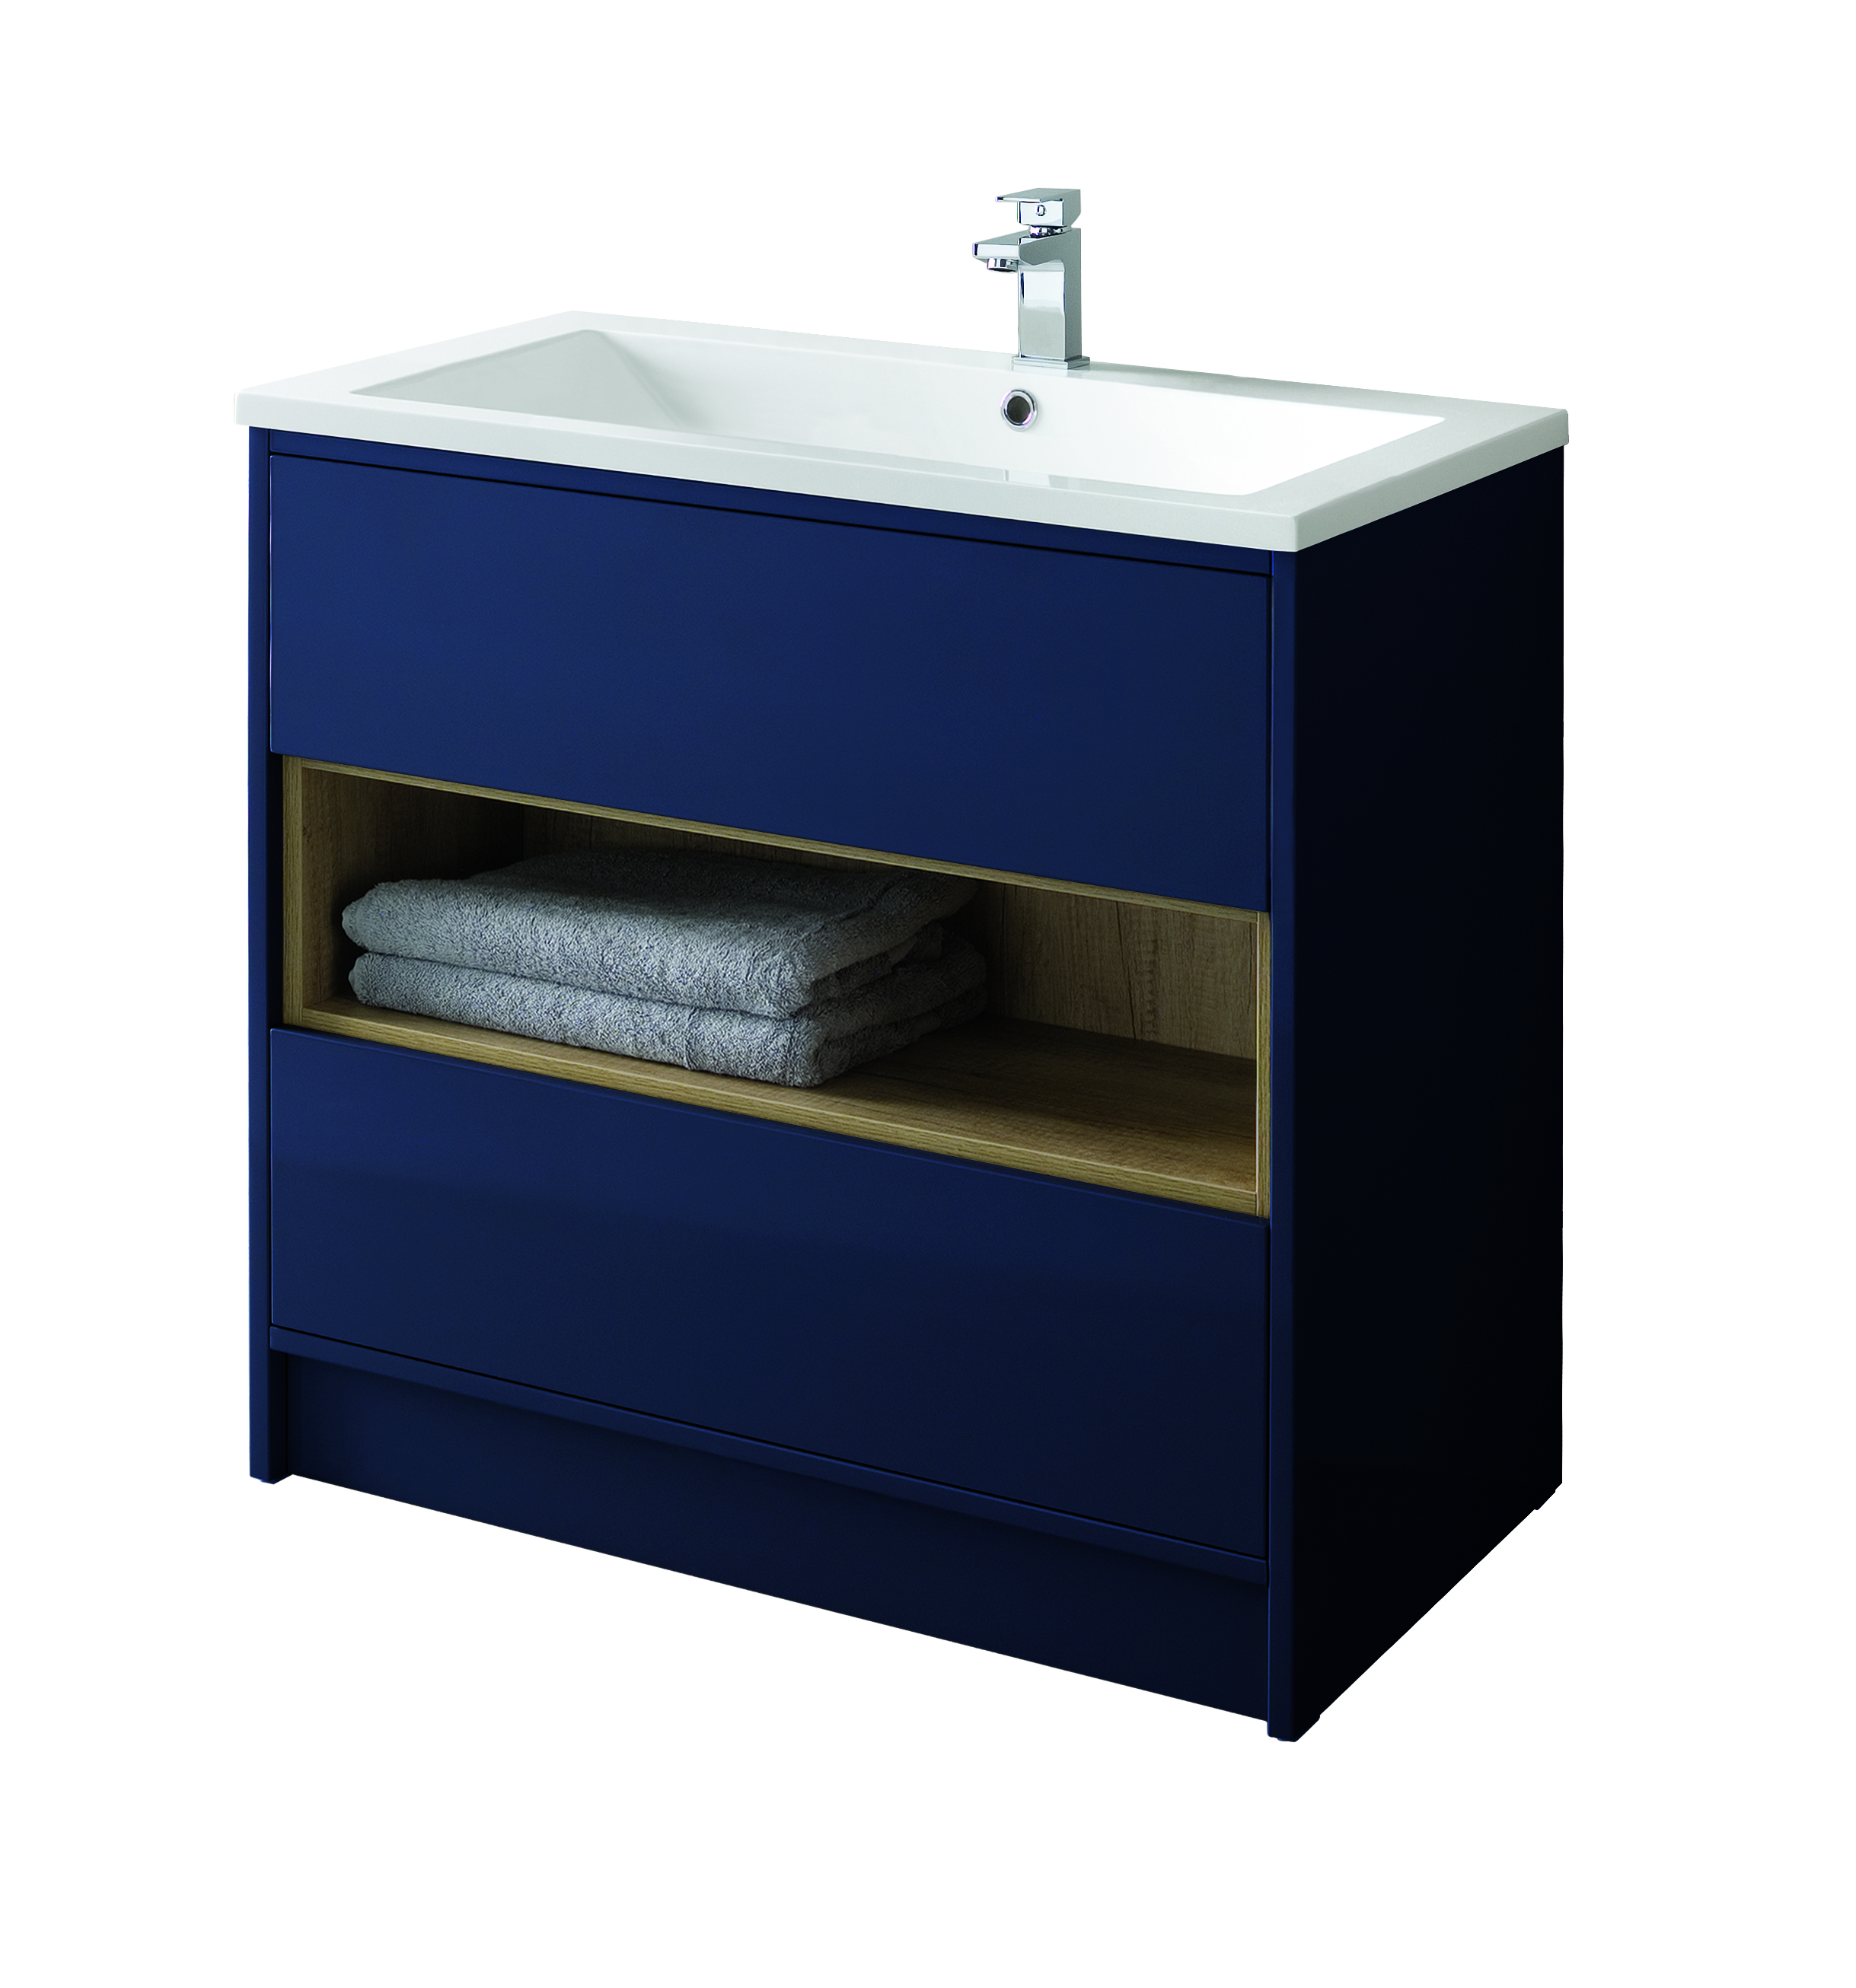 Lucca Matt Sapphire Blue Bathroom Furniture, Strabane Wholesale Ltd, 56 Railway Street, Strabane, BT82 8EH, 02871382374